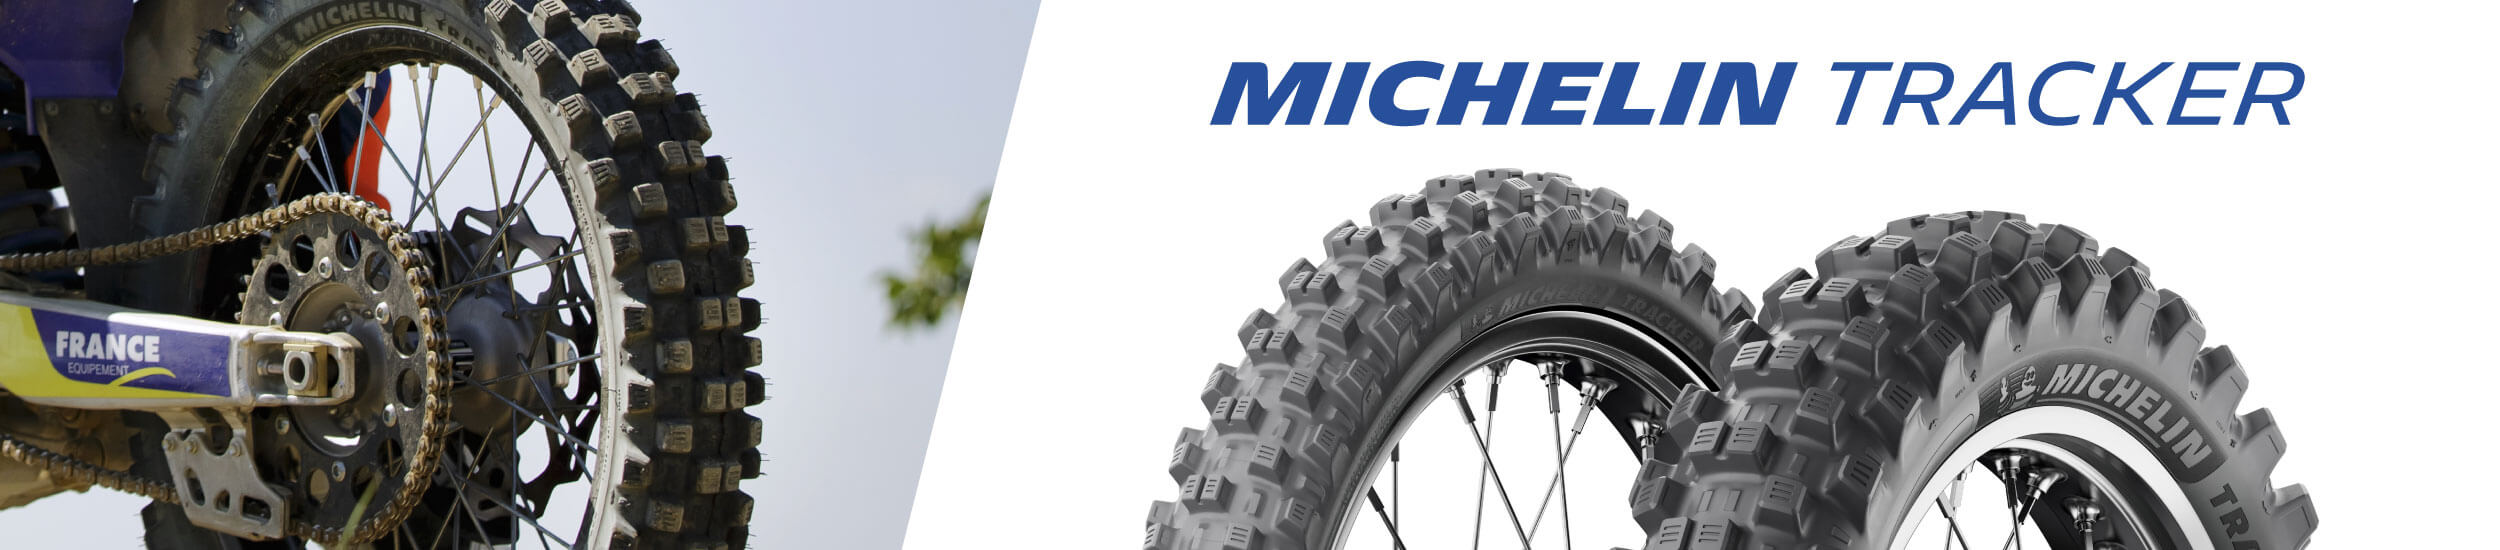 Michelin Tracker Banner